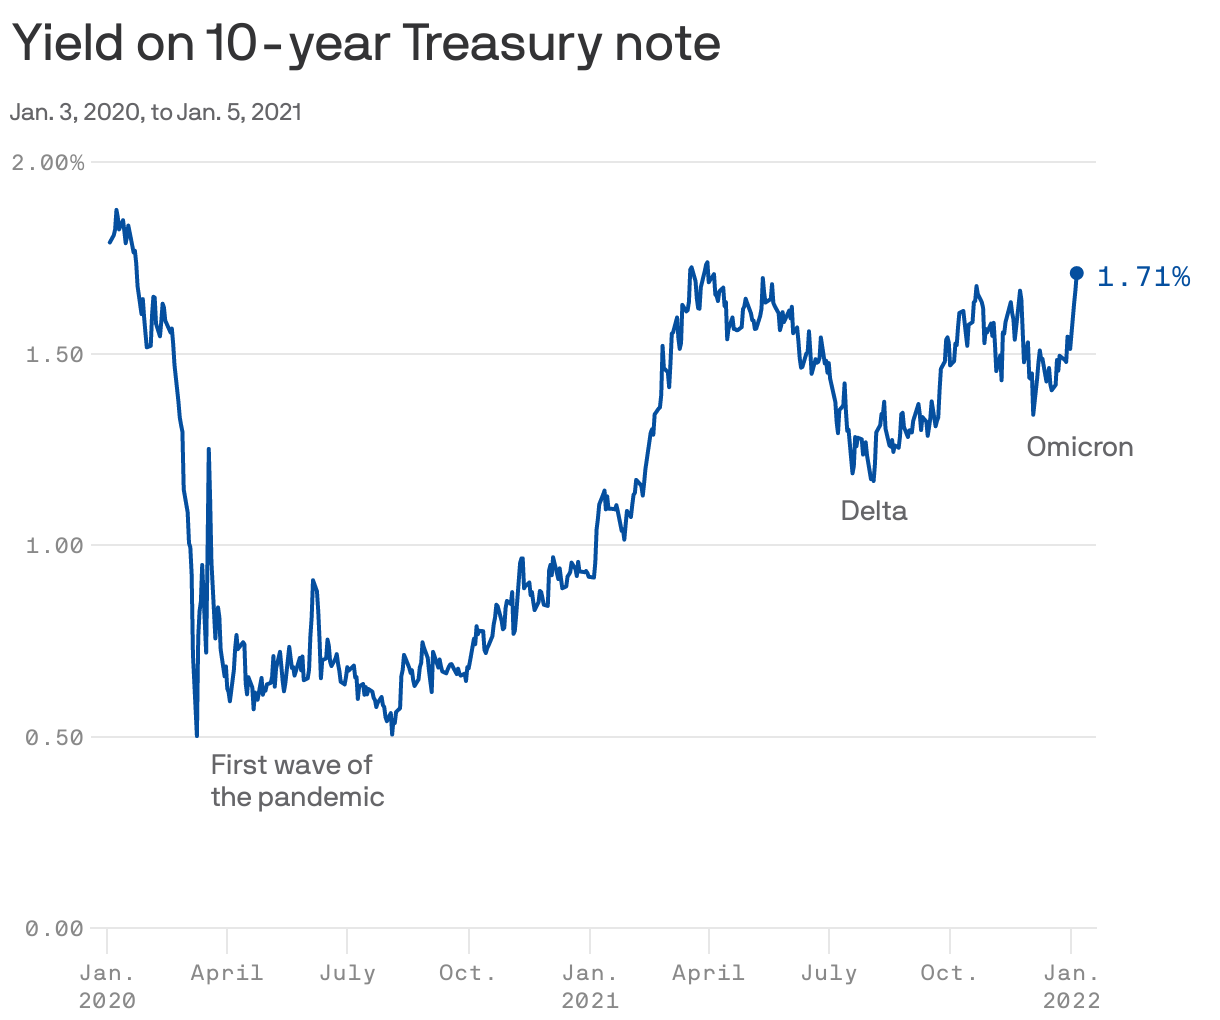 Yield on 10-year Treasury note